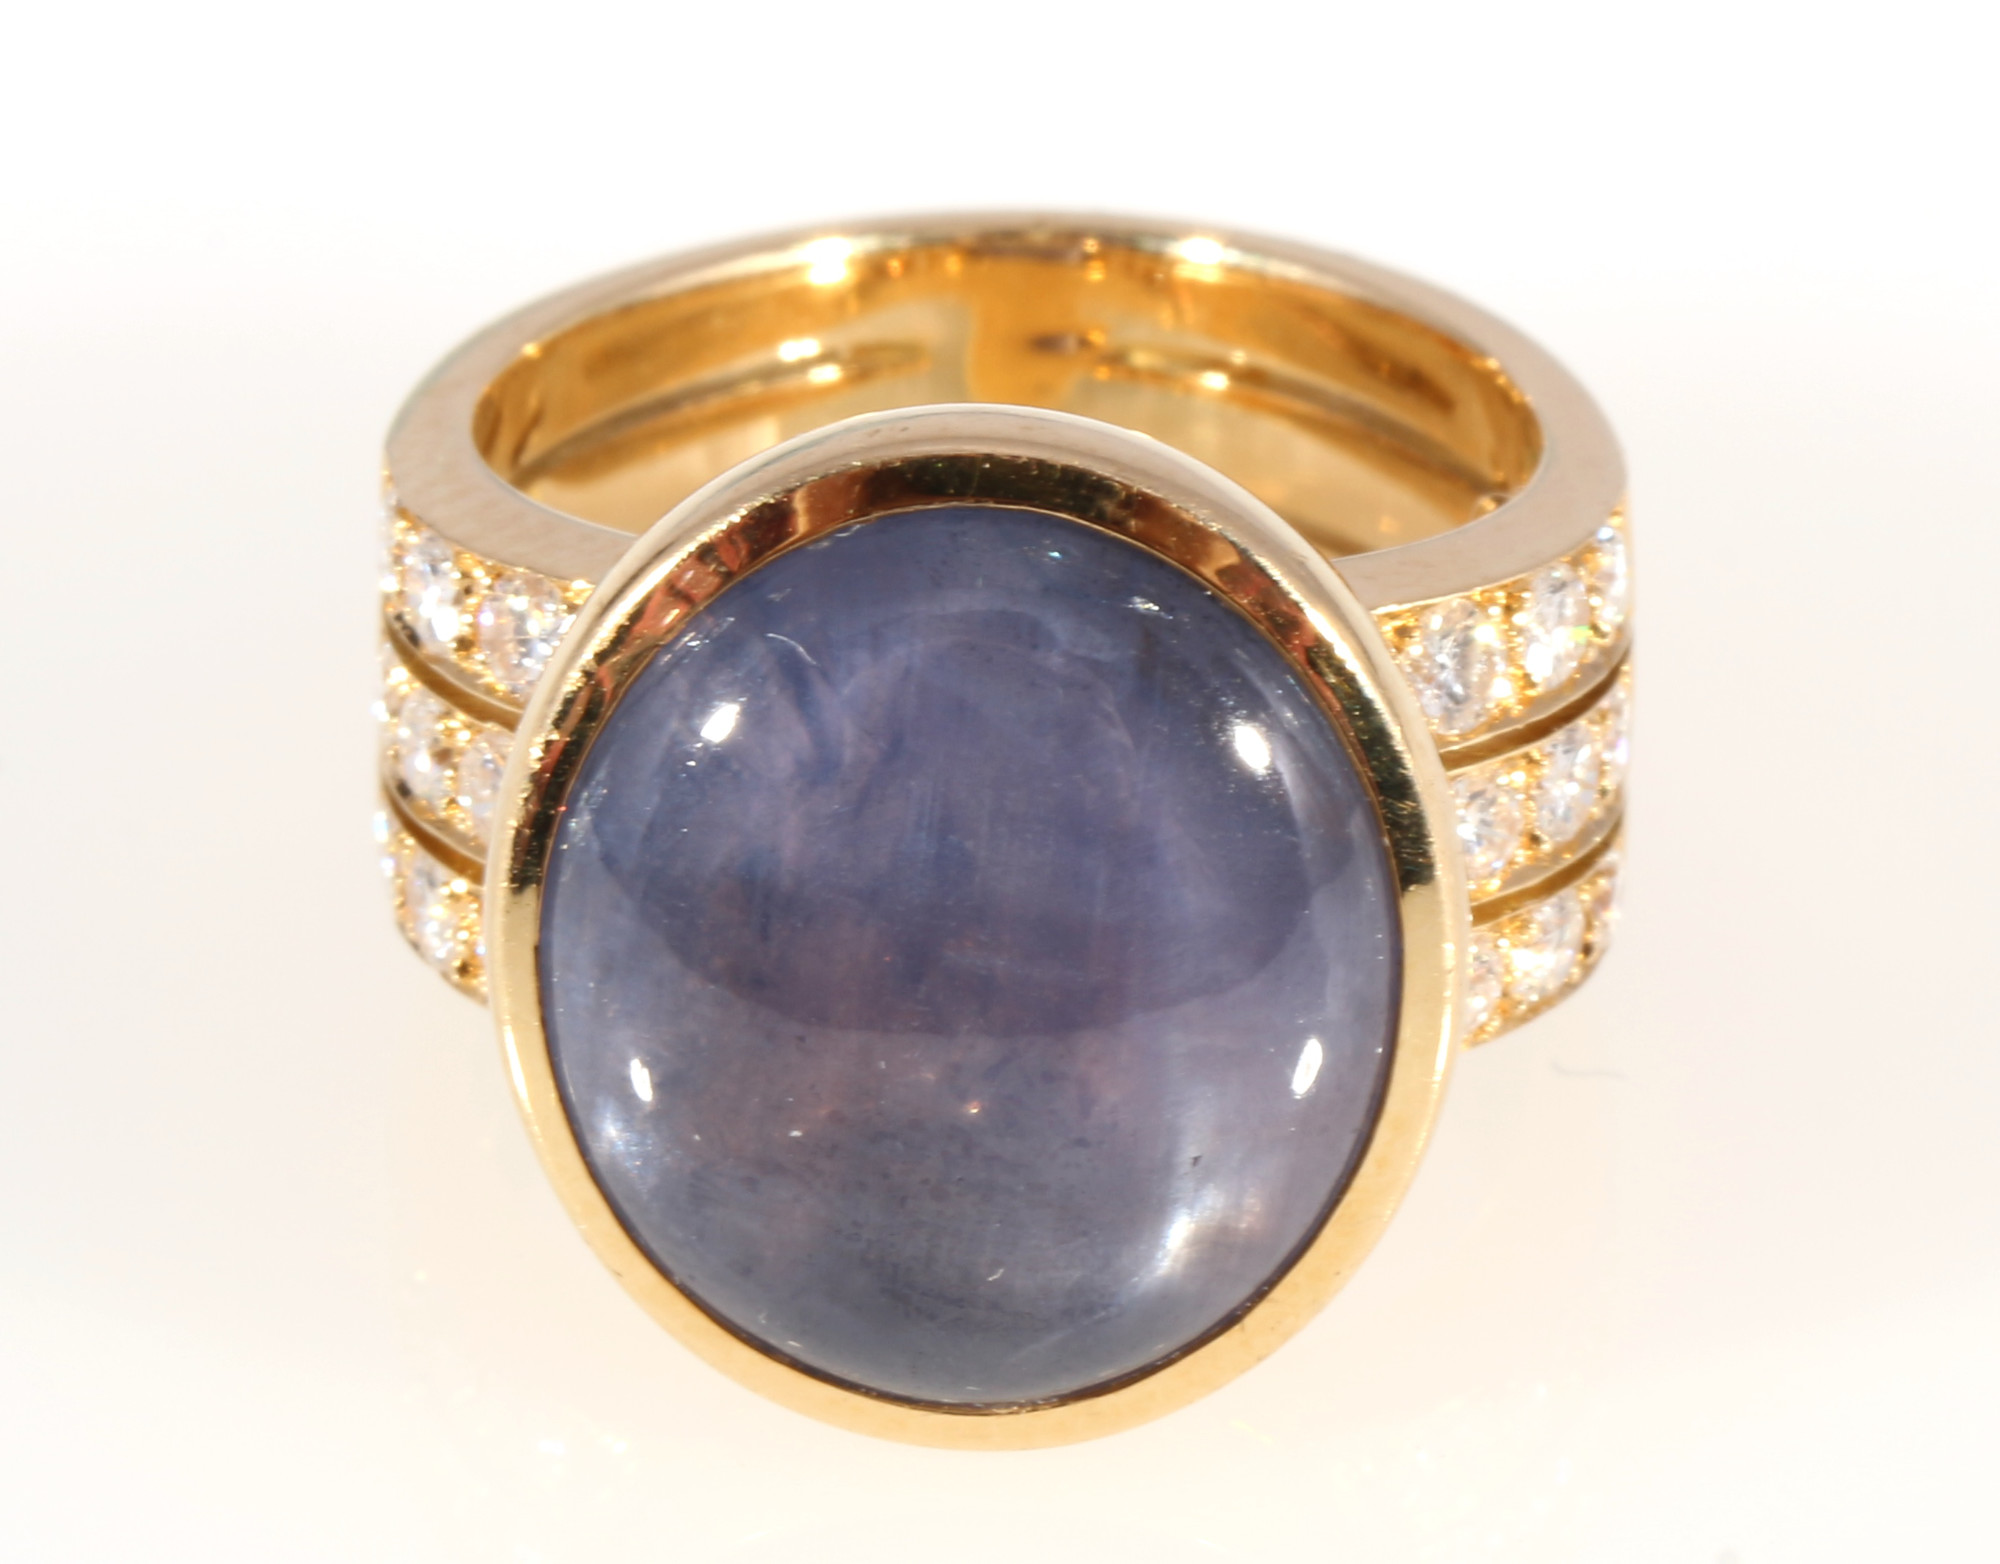 750 gold ring sapphire with 18 diamonds ca. 0.9 ct, 18K Gold Ring Saphir mit 18 Brillanten ca. 0,9ct - Image 3 of 4